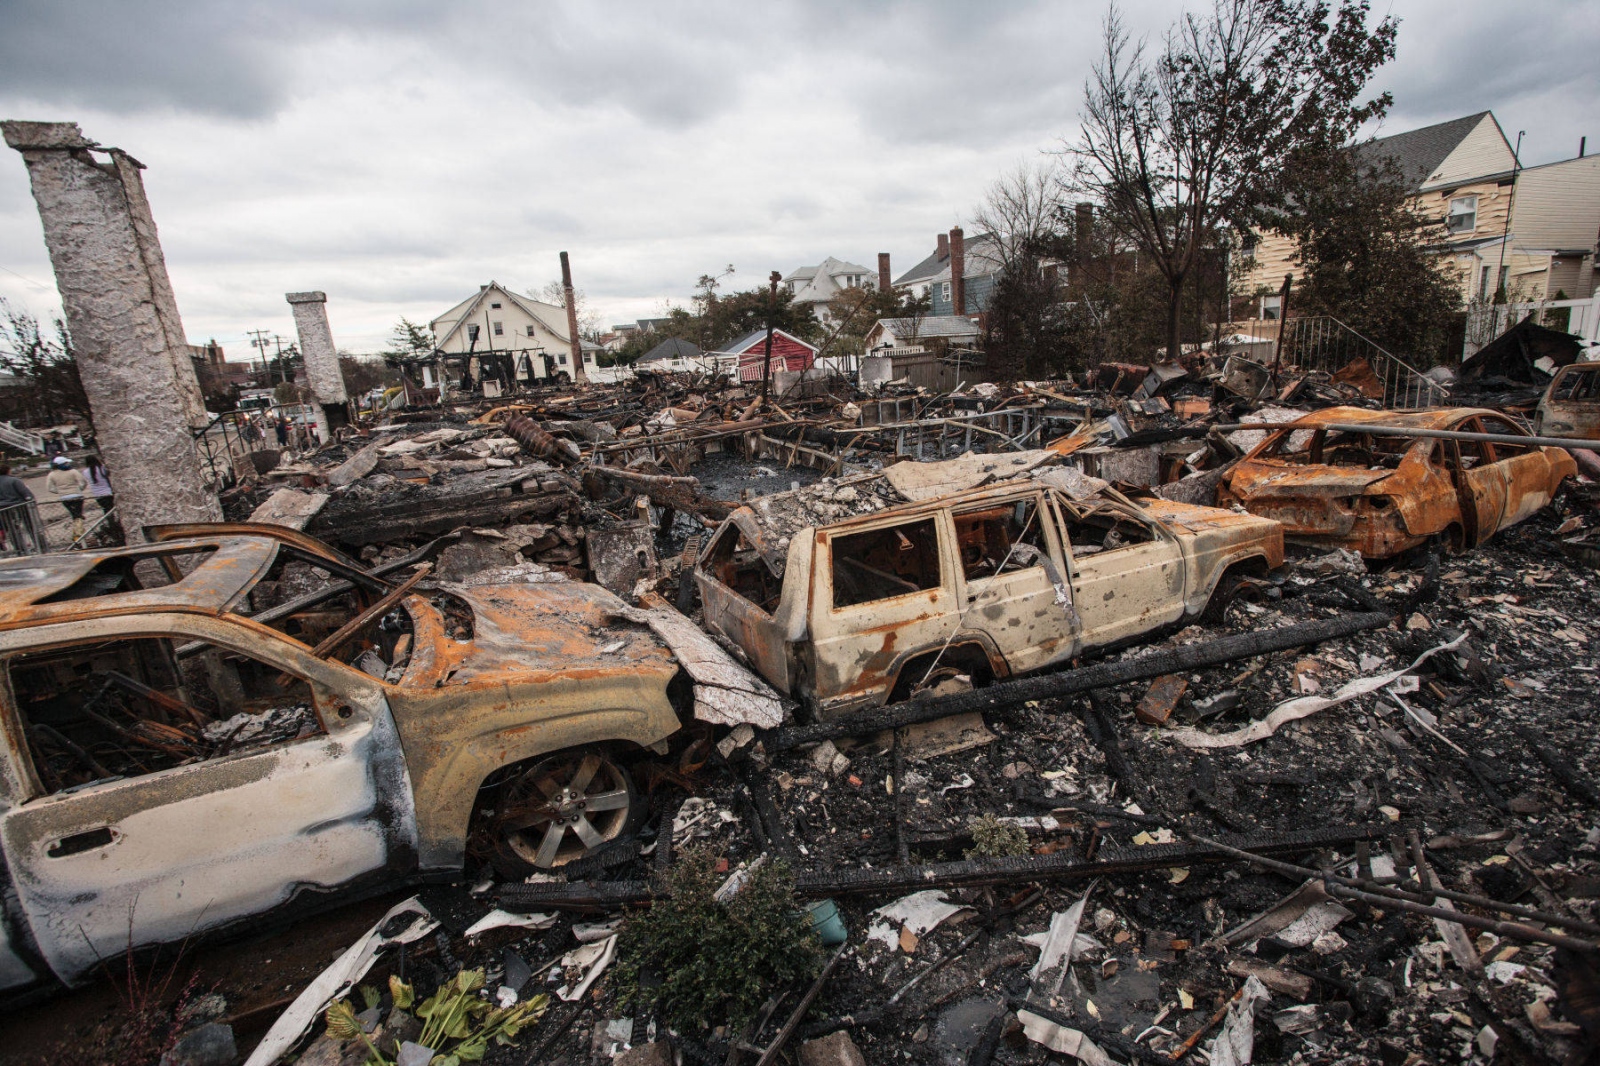 The Rockaways After Hurricane Sandy - Fire ravaged part of Beach 130th Street after Hurricane...